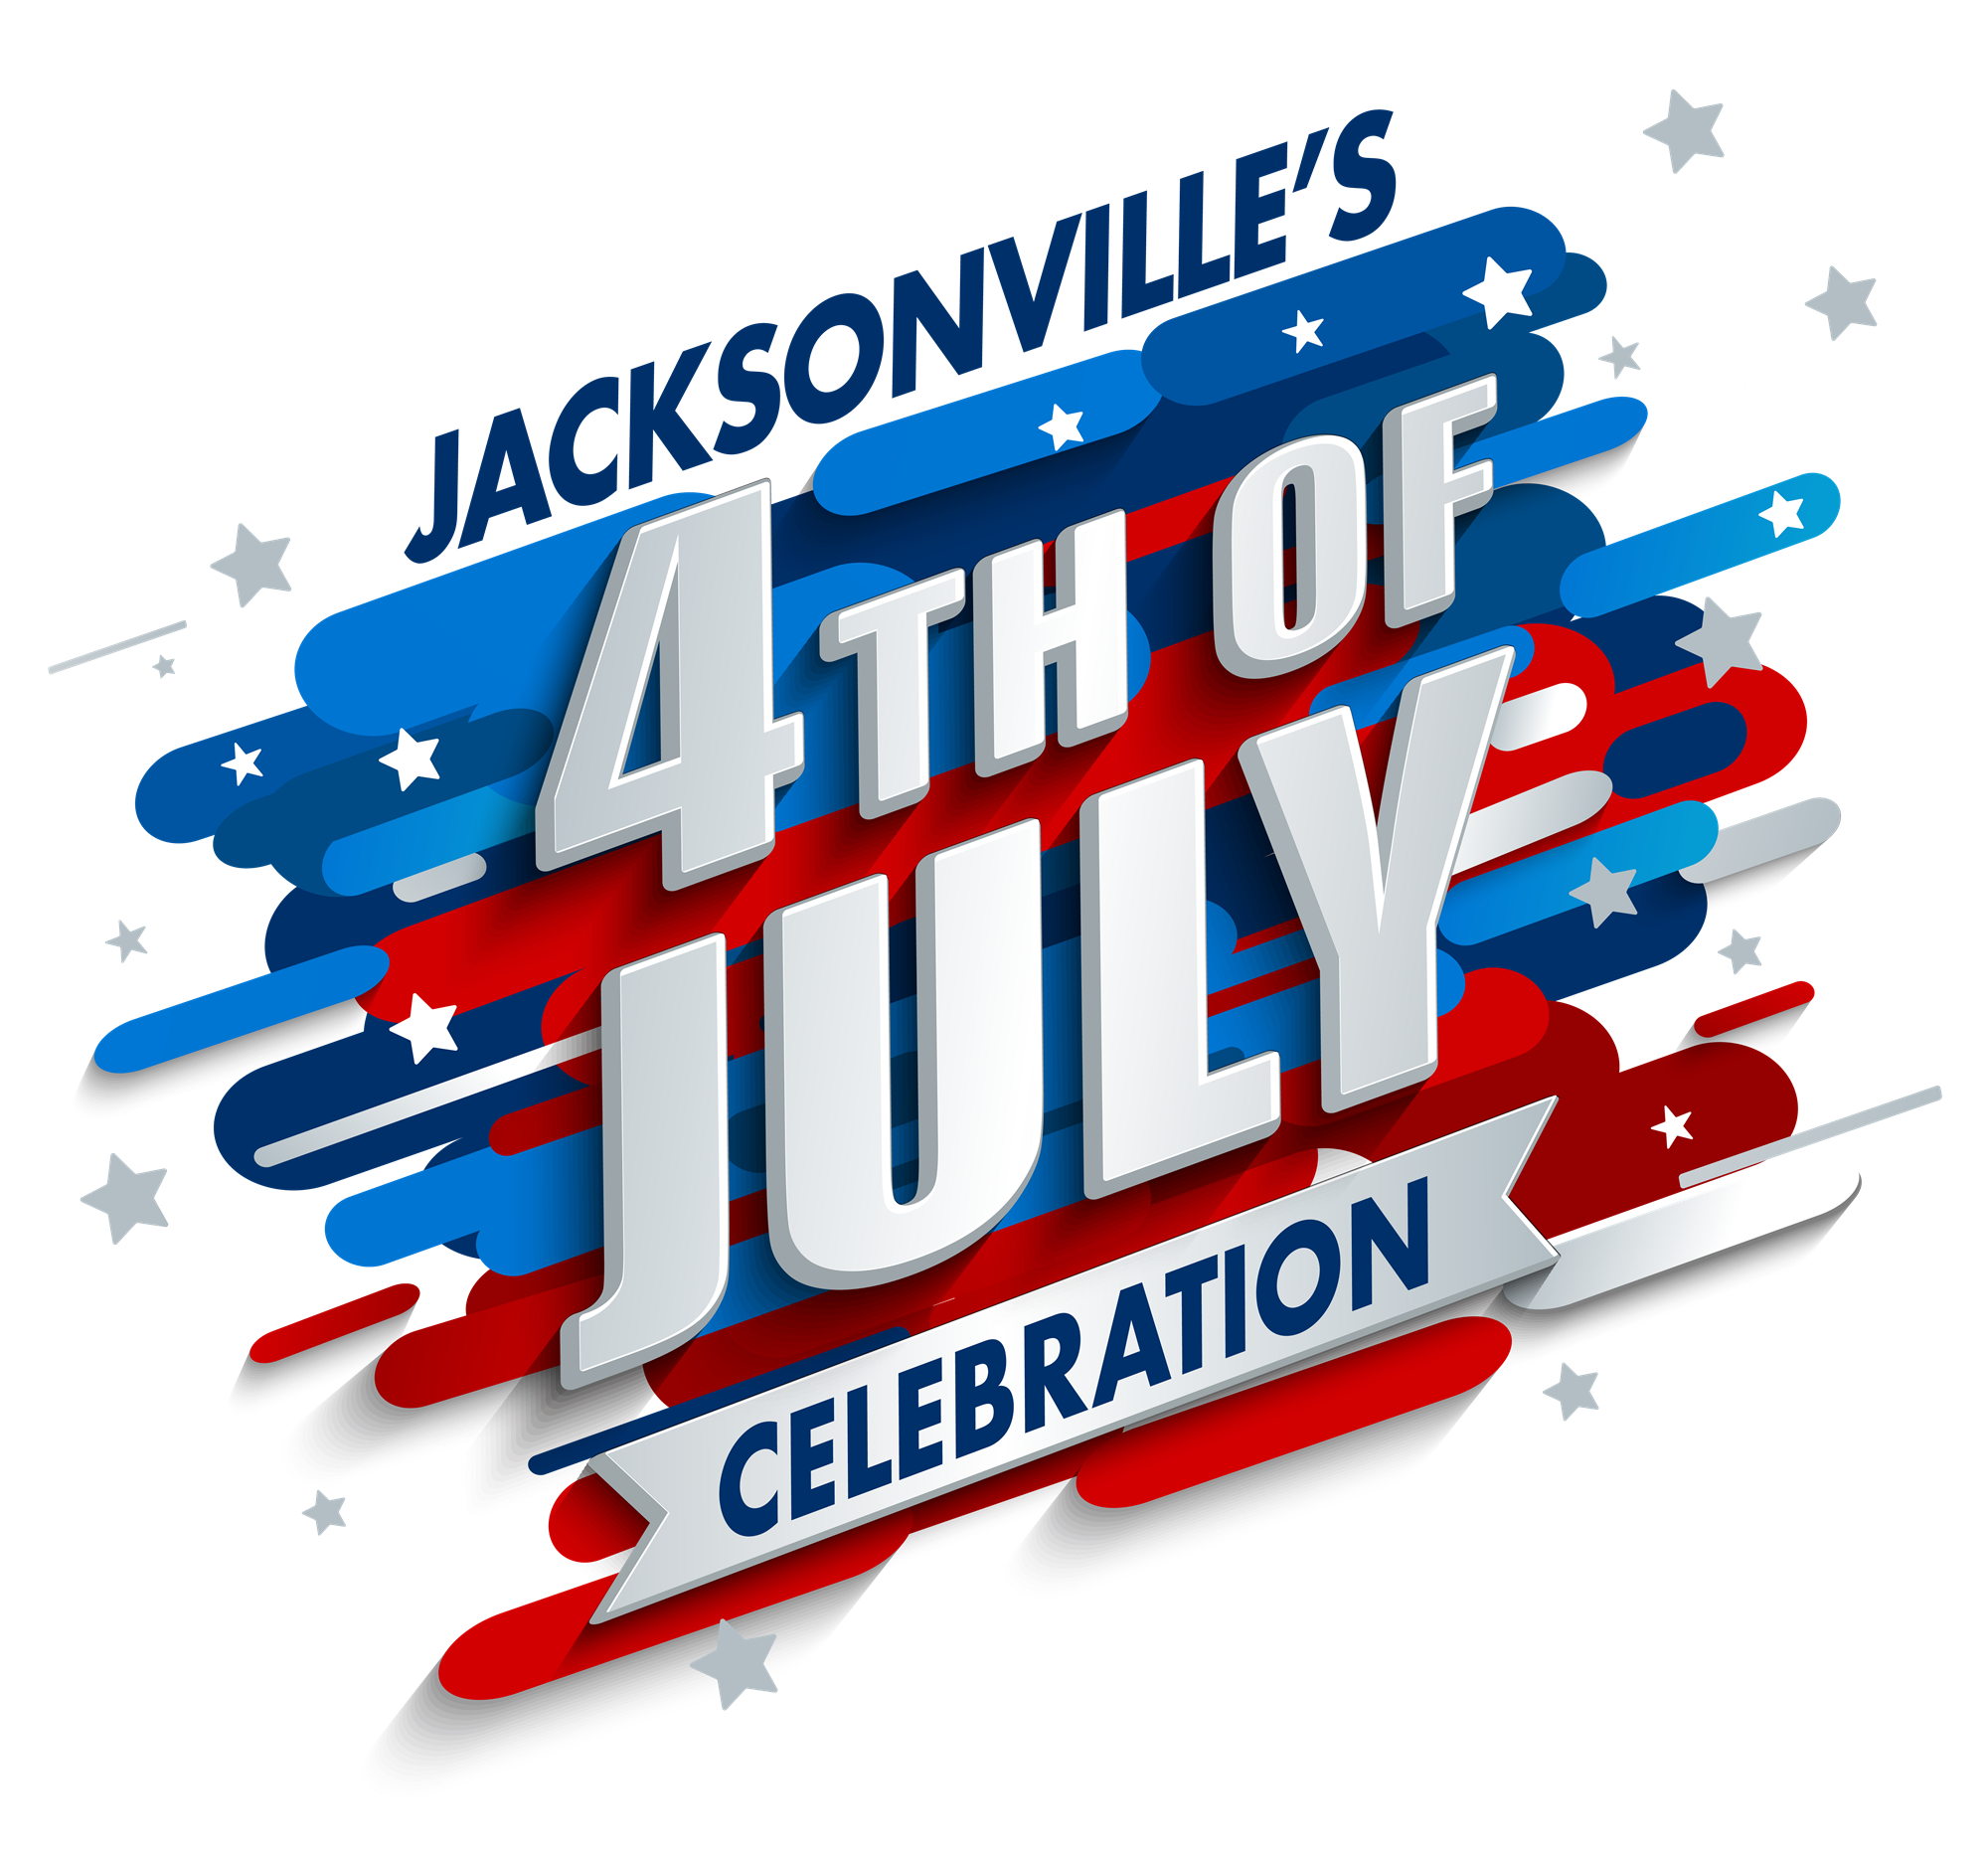 Jacksonville’s Fourth of July Fireworks Celebration